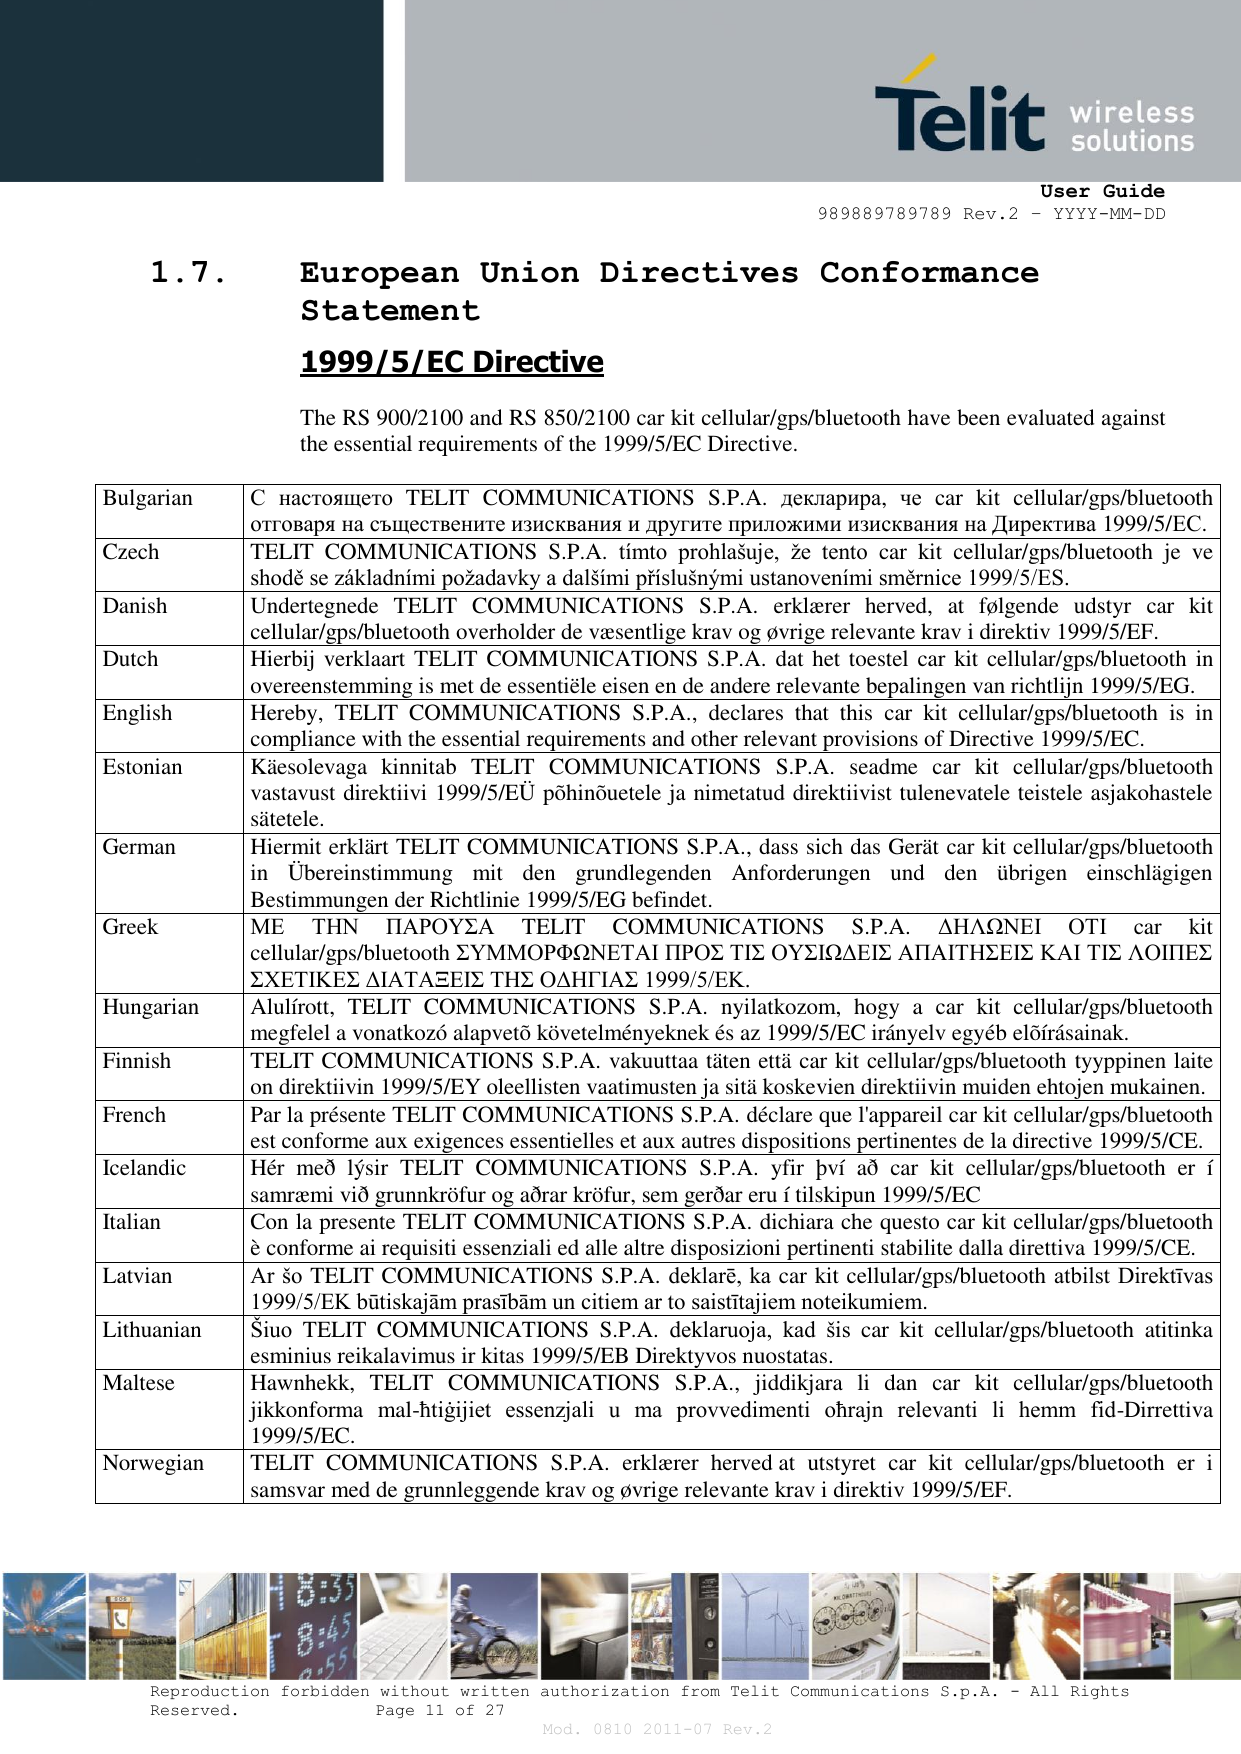      User Guide 989889789789 Rev.2 – YYYY-MM-DD  Reproduction forbidden without written authorization from Telit Communications S.p.A. - All Rights Reserved.    Page 11 of 27 Mod. 0810 2011-07 Rev.2 1.7. European Union Directives Conformance Statement 1999/5/EC Directive  The RS 900/2100 and RS 850/2100 car kit cellular/gps/bluetooth have been evaluated against the essential requirements of the 1999/5/EC Directive.  Bulgarian С настоящето  TELIT  COMMUNICATIONS  S.P.A.  декларира,  че  car  kit  cellular/gps/bluetooth отговаря на съществените изисквания и другите приложими изисквания на Директива 1999/5/ЕС. Czech TELIT  COMMUNICATIONS  S.P.A.  tímto  prohlašuje,  že  tento  car  kit  cellular/gps/bluetooth  je  ve shodě se základními požadavky a dalšími příslušnými ustanoveními směrnice 1999/5/ES. Danish Undertegnede  TELIT  COMMUNICATIONS  S.P.A.  erklærer  herved,  at  følgende  udstyr  car  kit cellular/gps/bluetooth overholder de væsentlige krav og øvrige relevante krav i direktiv 1999/5/EF. Dutch Hierbij verklaart TELIT COMMUNICATIONS S.P.A. dat het toestel car kit cellular/gps/bluetooth in overeenstemming is met de essentiële eisen en de andere relevante bepalingen van richtlijn 1999/5/EG. English Hereby,  TELIT  COMMUNICATIONS  S.P.A.,  declares  that  this  car  kit  cellular/gps/bluetooth  is  in compliance with the essential requirements and other relevant provisions of Directive 1999/5/EC. Estonian Käesolevaga  kinnitab  TELIT  COMMUNICATIONS  S.P.A.  seadme  car  kit  cellular/gps/bluetooth vastavust direktiivi 1999/5/EÜ põhinõuetele ja nimetatud direktiivist tulenevatele teistele asjakohastele sätetele. German Hiermit erklärt TELIT COMMUNICATIONS S.P.A., dass sich das Gerät car kit cellular/gps/bluetooth in  Übereinstimmung  mit  den  grundlegenden  Anforderungen  und  den  übrigen  einschlägigen Bestimmungen der Richtlinie 1999/5/EG befindet. Greek ΜΕ  ΤΗΝ  ΠΑΡΟΥΣΑ  TELIT  COMMUNICATIONS  S.P.A.  ΔΗΛΩΝΕΙ  ΟΤΙ  car  kit cellular/gps/bluetooth ΣΥΜΜΟΡΦΩΝΕΤΑΙ ΠΡΟΣ ΤΙΣ ΟΥΣΙΩΔΕΙΣ ΑΠΑΙΤΗΣΕΙΣ ΚΑΙ ΤΙΣ ΛΟΙΠΕΣ ΣΧΕΤΙΚΕΣ ΔΙΑΤΑΞΕΙΣ ΤΗΣ ΟΔΗΓΙΑΣ 1999/5/ΕΚ. Hungarian Alulírott,  TELIT  COMMUNICATIONS  S.P.A.  nyilatkozom,  hogy  a  car  kit  cellular/gps/bluetooth megfelel a vonatkozó alapvetõ követelményeknek és az 1999/5/EC irányelv egyéb elõírásainak. Finnish TELIT COMMUNICATIONS S.P.A. vakuuttaa täten että car kit cellular/gps/bluetooth tyyppinen laite on direktiivin 1999/5/EY oleellisten vaatimusten ja sitä koskevien direktiivin muiden ehtojen mukainen. French Par la présente TELIT COMMUNICATIONS S.P.A. déclare que l&apos;appareil car kit cellular/gps/bluetooth est conforme aux exigences essentielles et aux autres dispositions pertinentes de la directive 1999/5/CE. Icelandic Hér  með  lýsir  TELIT  COMMUNICATIONS  S.P.A.  yfir  því  að  car  kit  cellular/gps/bluetooth  er  í samræmi við grunnkröfur og aðrar kröfur, sem gerðar eru í tilskipun 1999/5/EC Italian Con la presente TELIT COMMUNICATIONS S.P.A. dichiara che questo car kit cellular/gps/bluetooth è conforme ai requisiti essenziali ed alle altre disposizioni pertinenti stabilite dalla direttiva 1999/5/CE. Latvian Ar šo TELIT COMMUNICATIONS S.P.A. deklarē, ka car kit cellular/gps/bluetooth atbilst Direktīvas 1999/5/EK būtiskajām prasībām un citiem ar to saistītajiem noteikumiem. Lithuanian Šiuo  TELIT  COMMUNICATIONS  S.P.A.  deklaruoja,  kad  šis  car  kit  cellular/gps/bluetooth  atitinka esminius reikalavimus ir kitas 1999/5/EB Direktyvos nuostatas. Maltese Hawnhekk,  TELIT  COMMUNICATIONS  S.P.A.,  jiddikjara  li  dan  car  kit  cellular/gps/bluetooth jikkonforma  mal-ħtiġijiet  essenzjali  u  ma  provvedimenti  oħrajn  relevanti  li  hemm  fid-Dirrettiva 1999/5/EC. Norwegian TELIT  COMMUNICATIONS  S.P.A.  erklærer  herved at  utstyret  car  kit  cellular/gps/bluetooth  er  i samsvar med de grunnleggende krav og øvrige relevante krav i direktiv 1999/5/EF. 